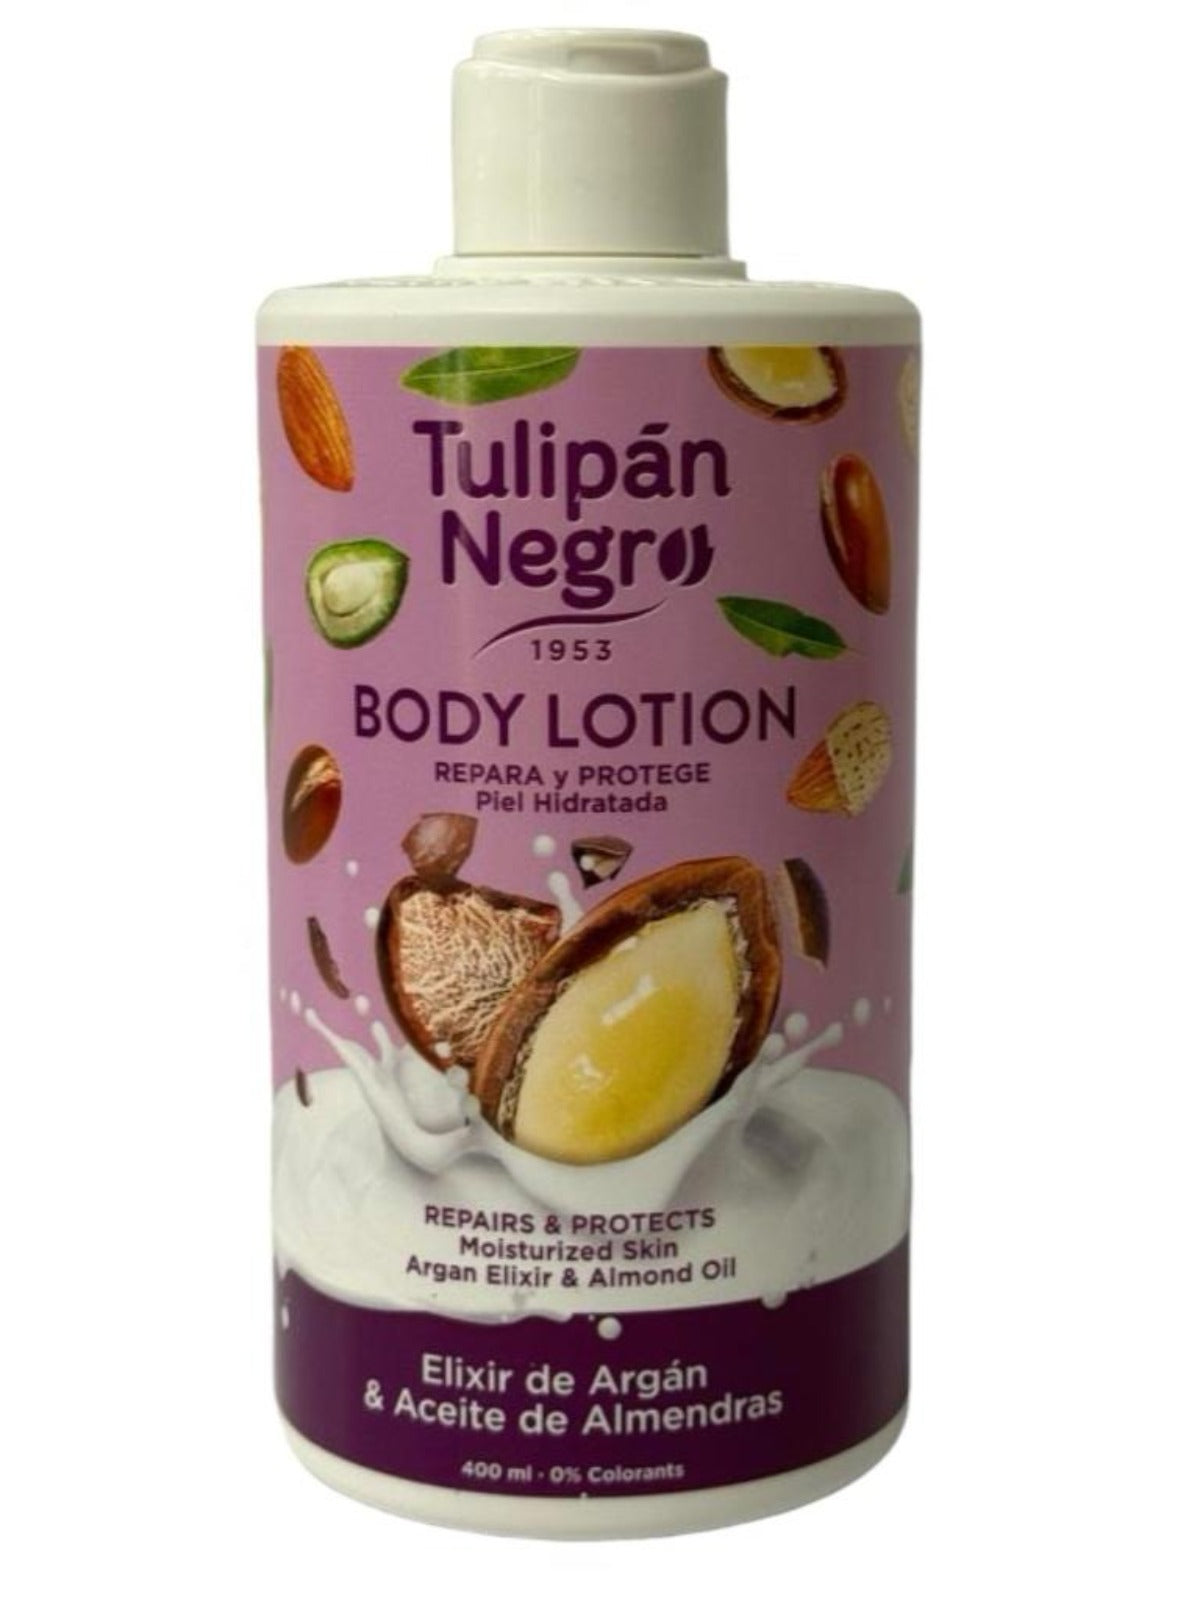 Tulipan Negro Argan and Almond Oil Elixir Body Lotion 400ml